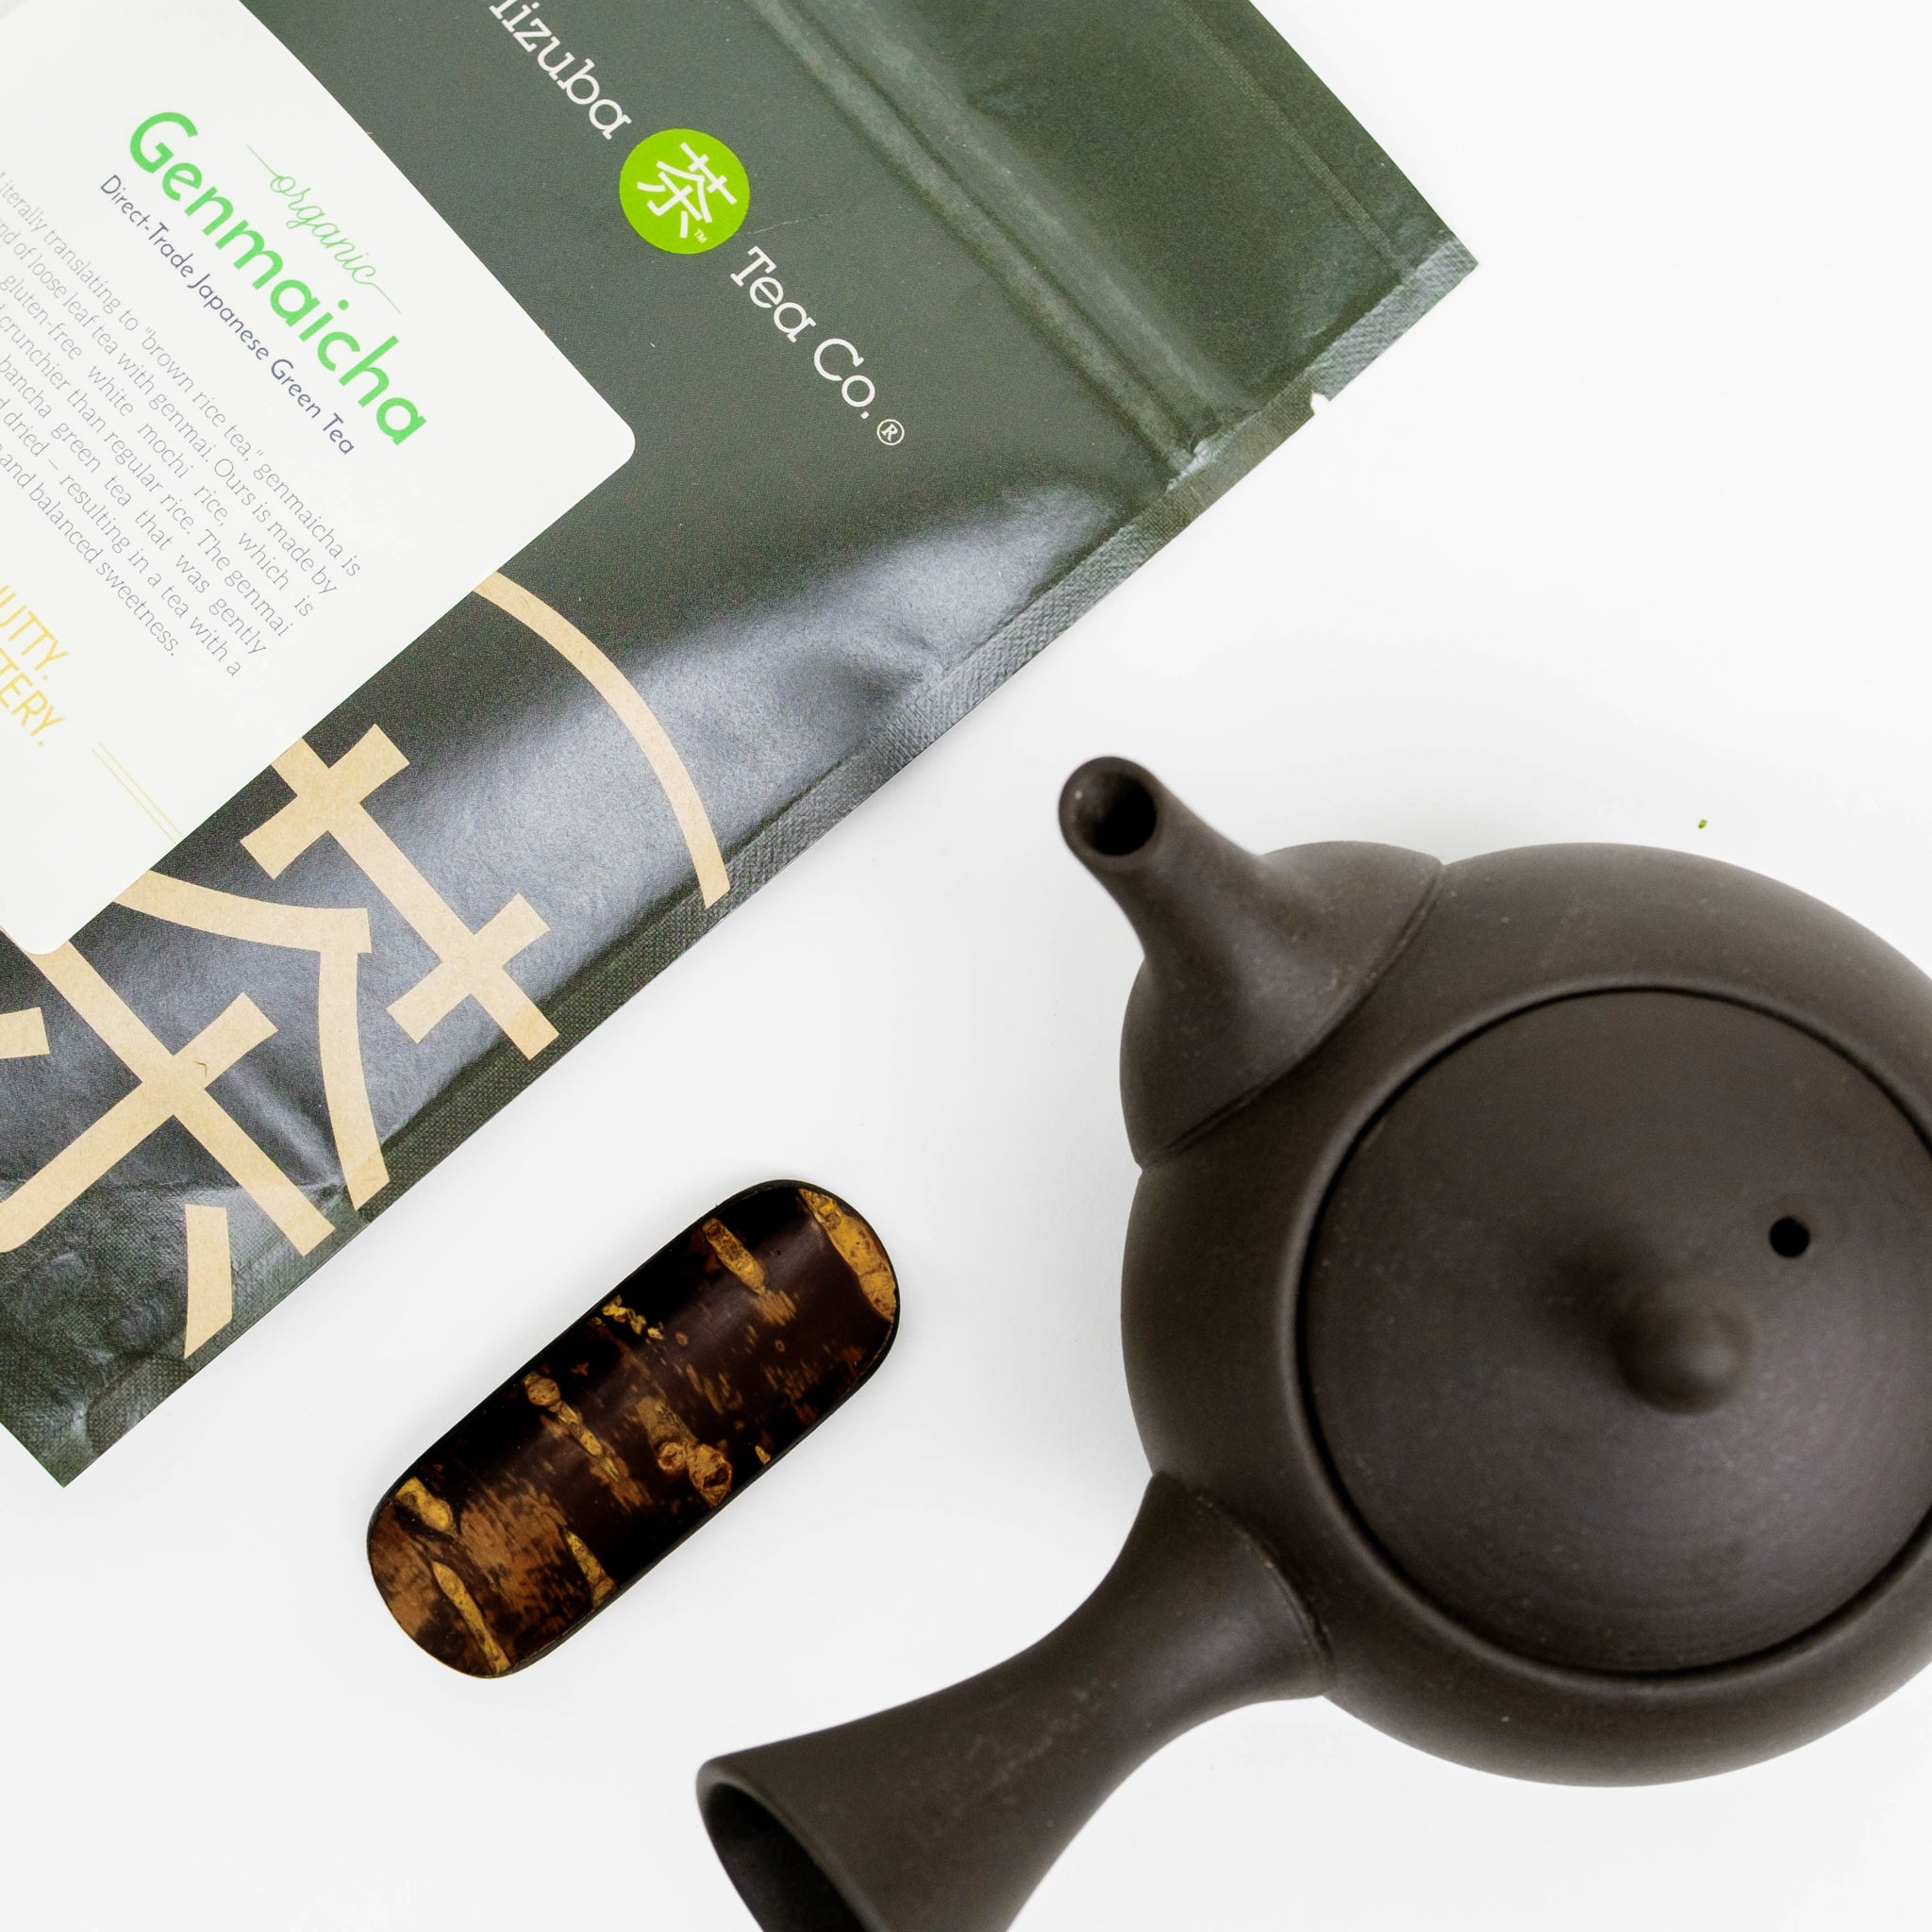 Buy Premium Japanese Green Tea and Japanese Tokoname Kyusu Gift Set 🍵 –  Japanese Green Tea Co.